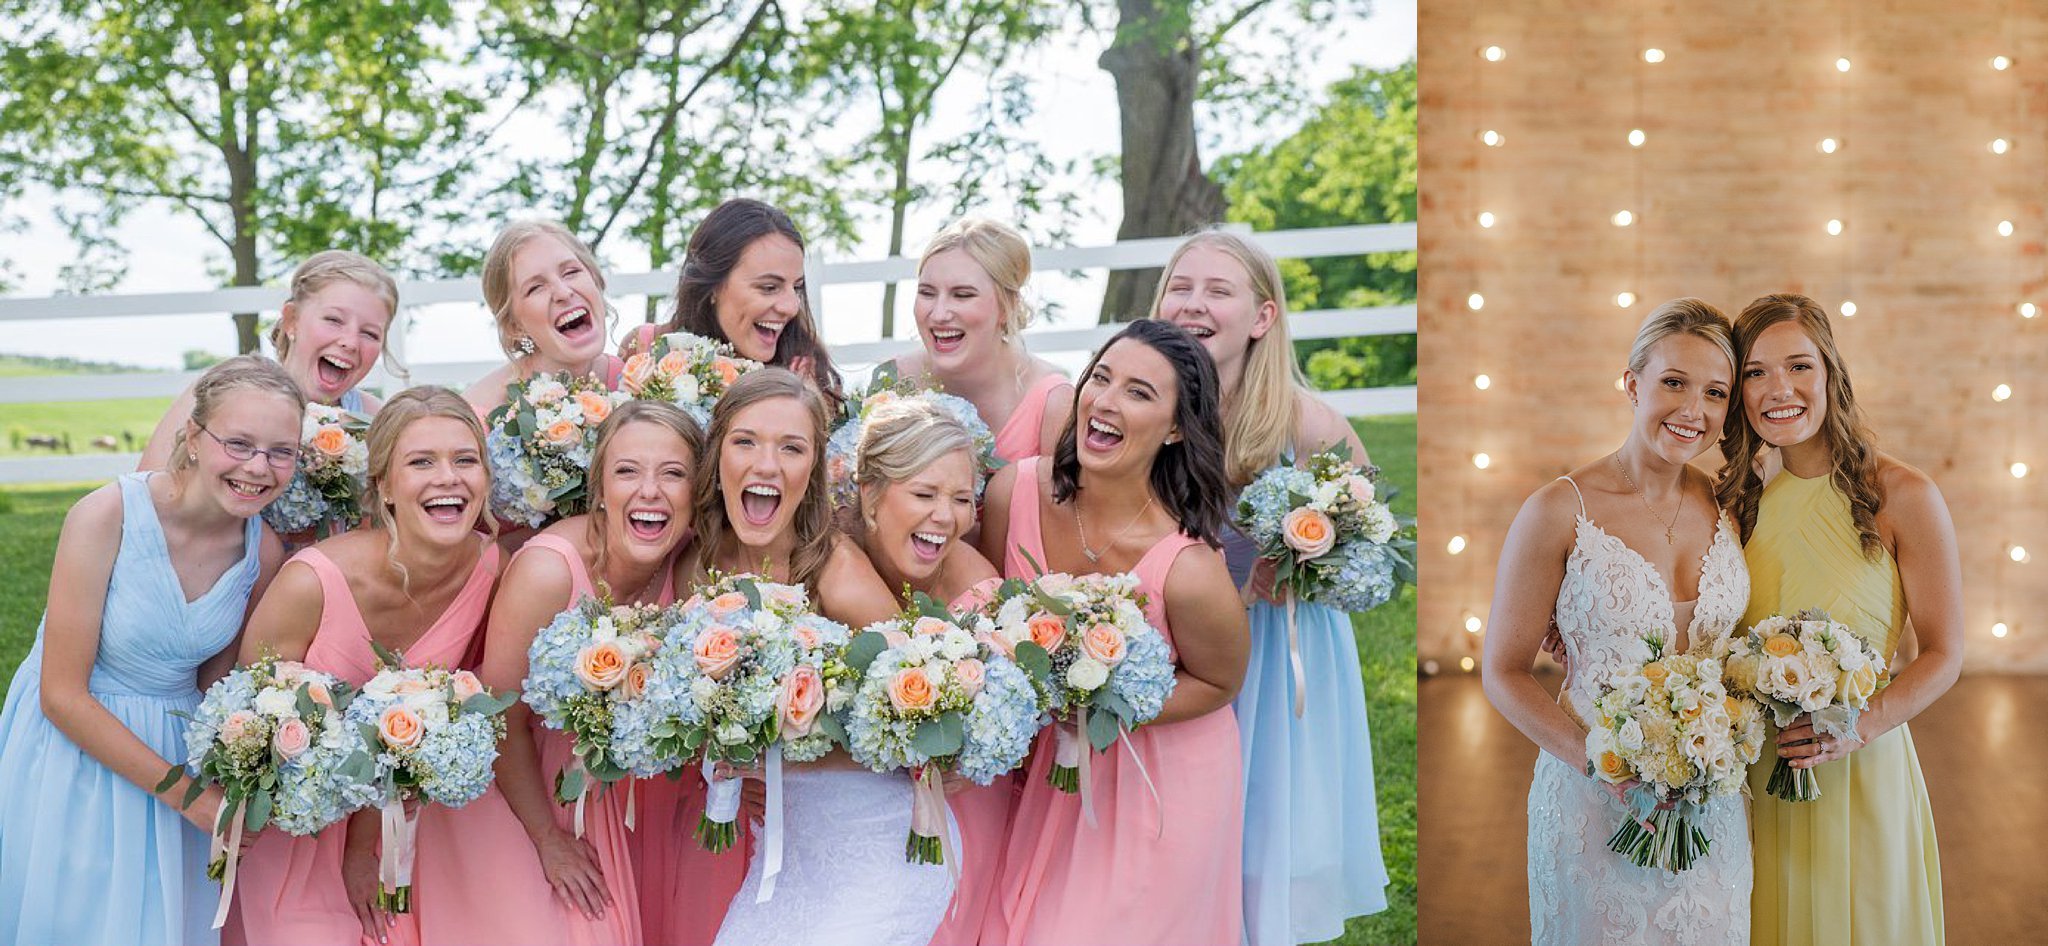 Minnesota wedding photographer at sisters' weddings